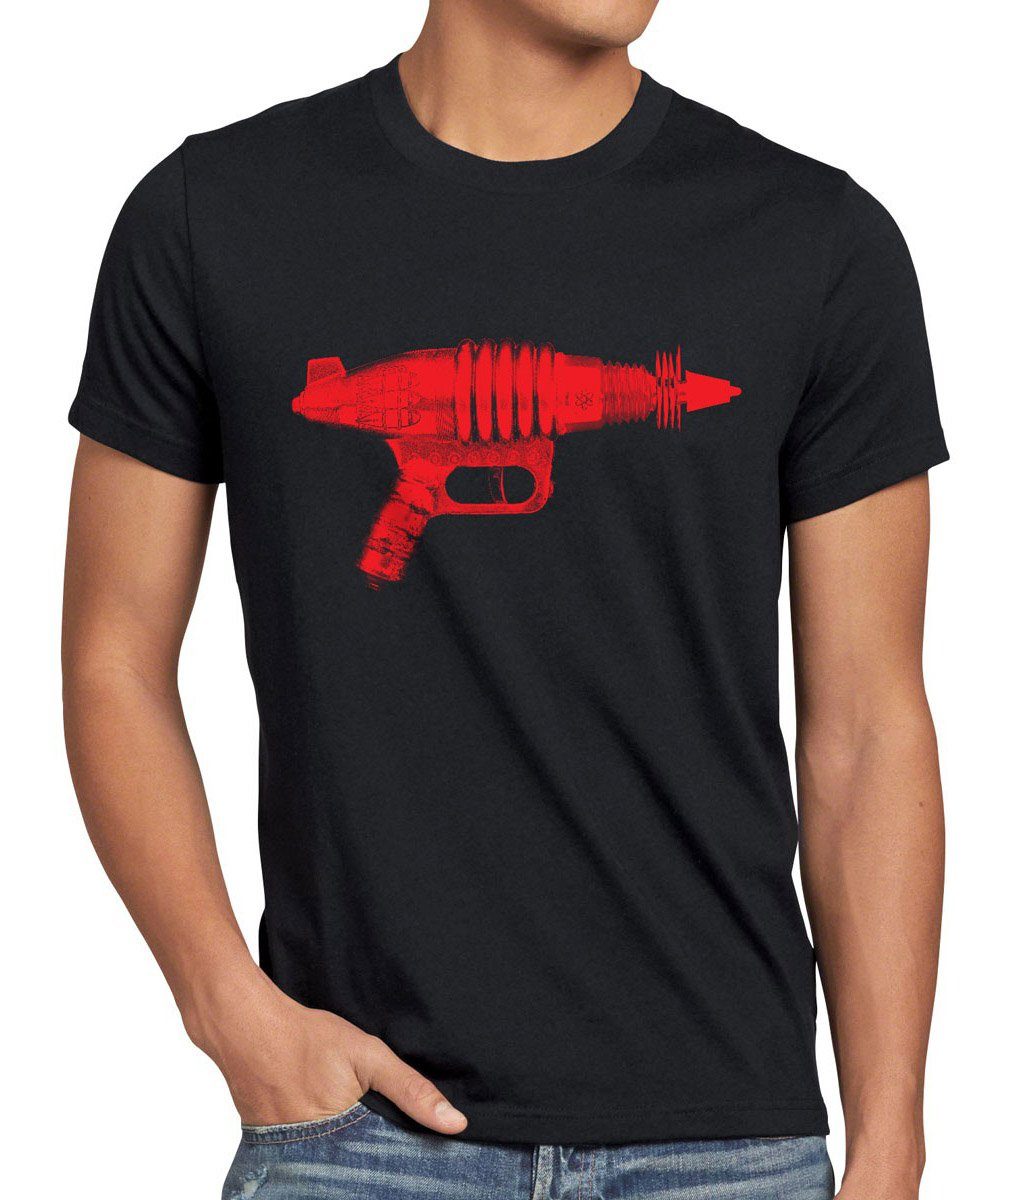 Theory schwarz Print-Shirt Big Alien Bang Space T-Shirt Gun SciFi style3 Herren Black Men Sheldon Cooper